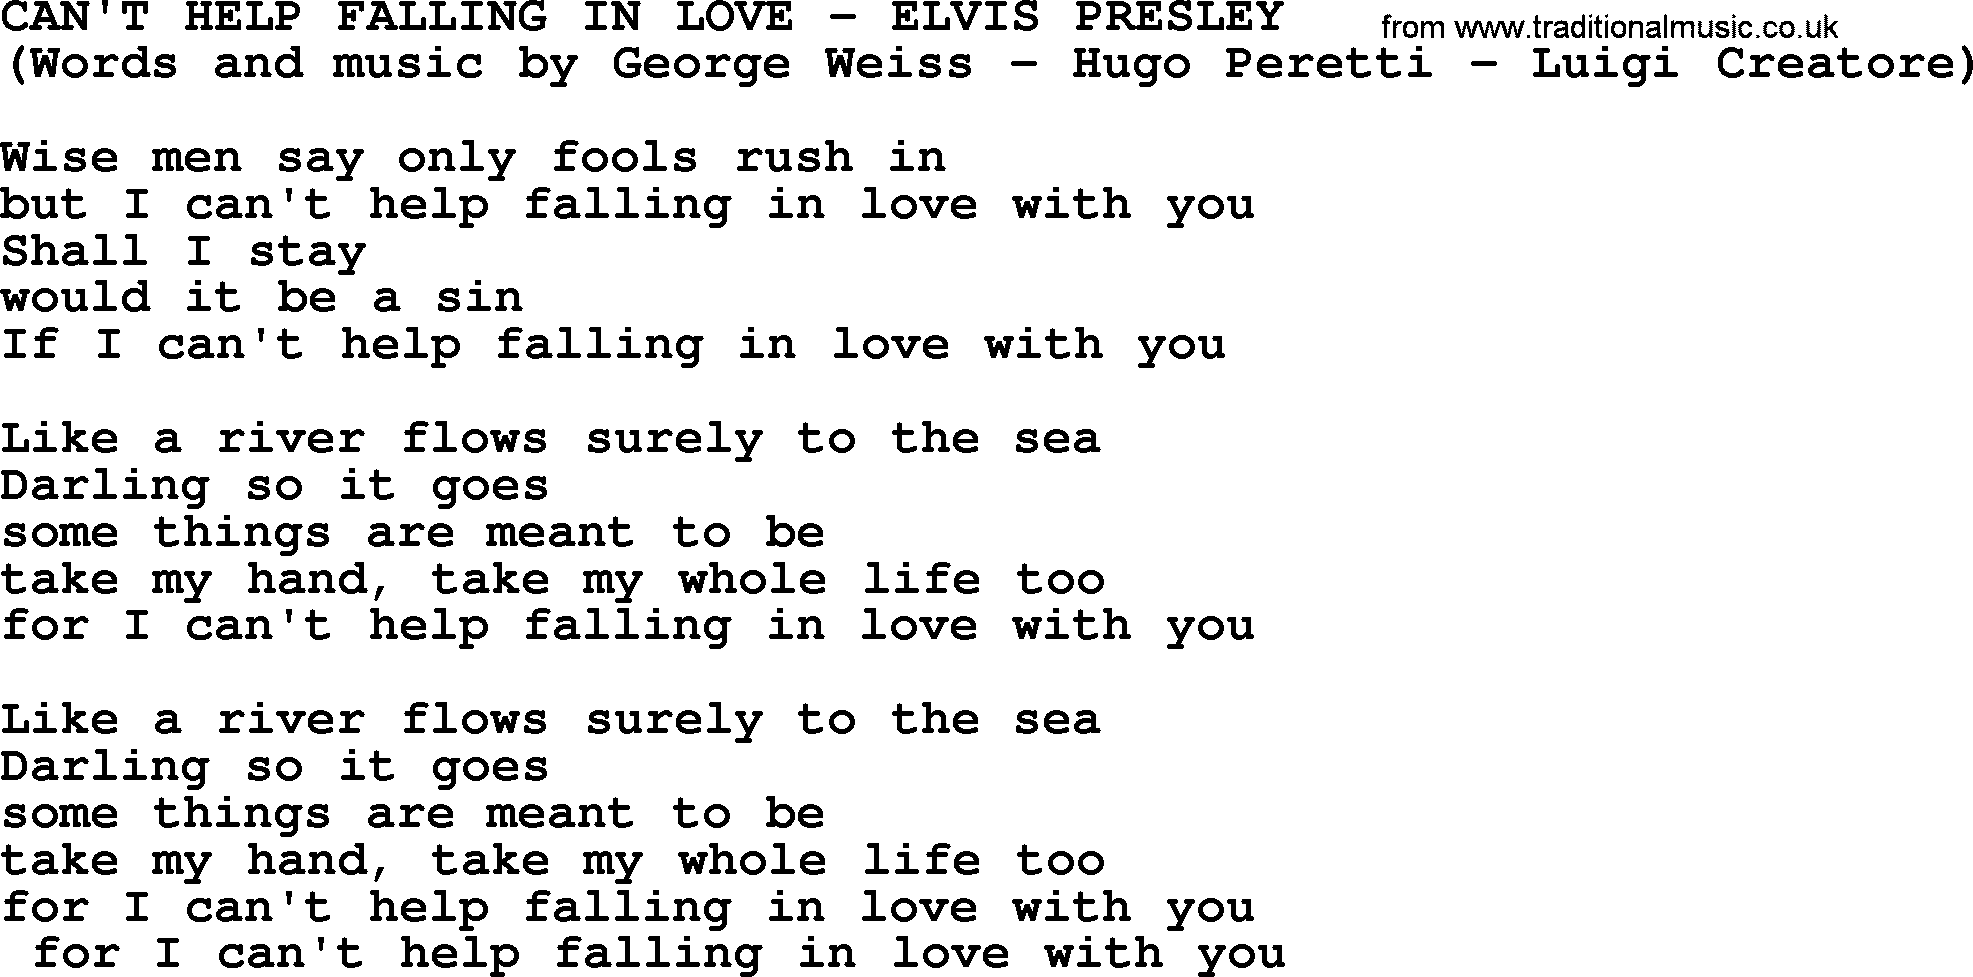 Can't Help Falling In Love by Elvis Presley - lyrics